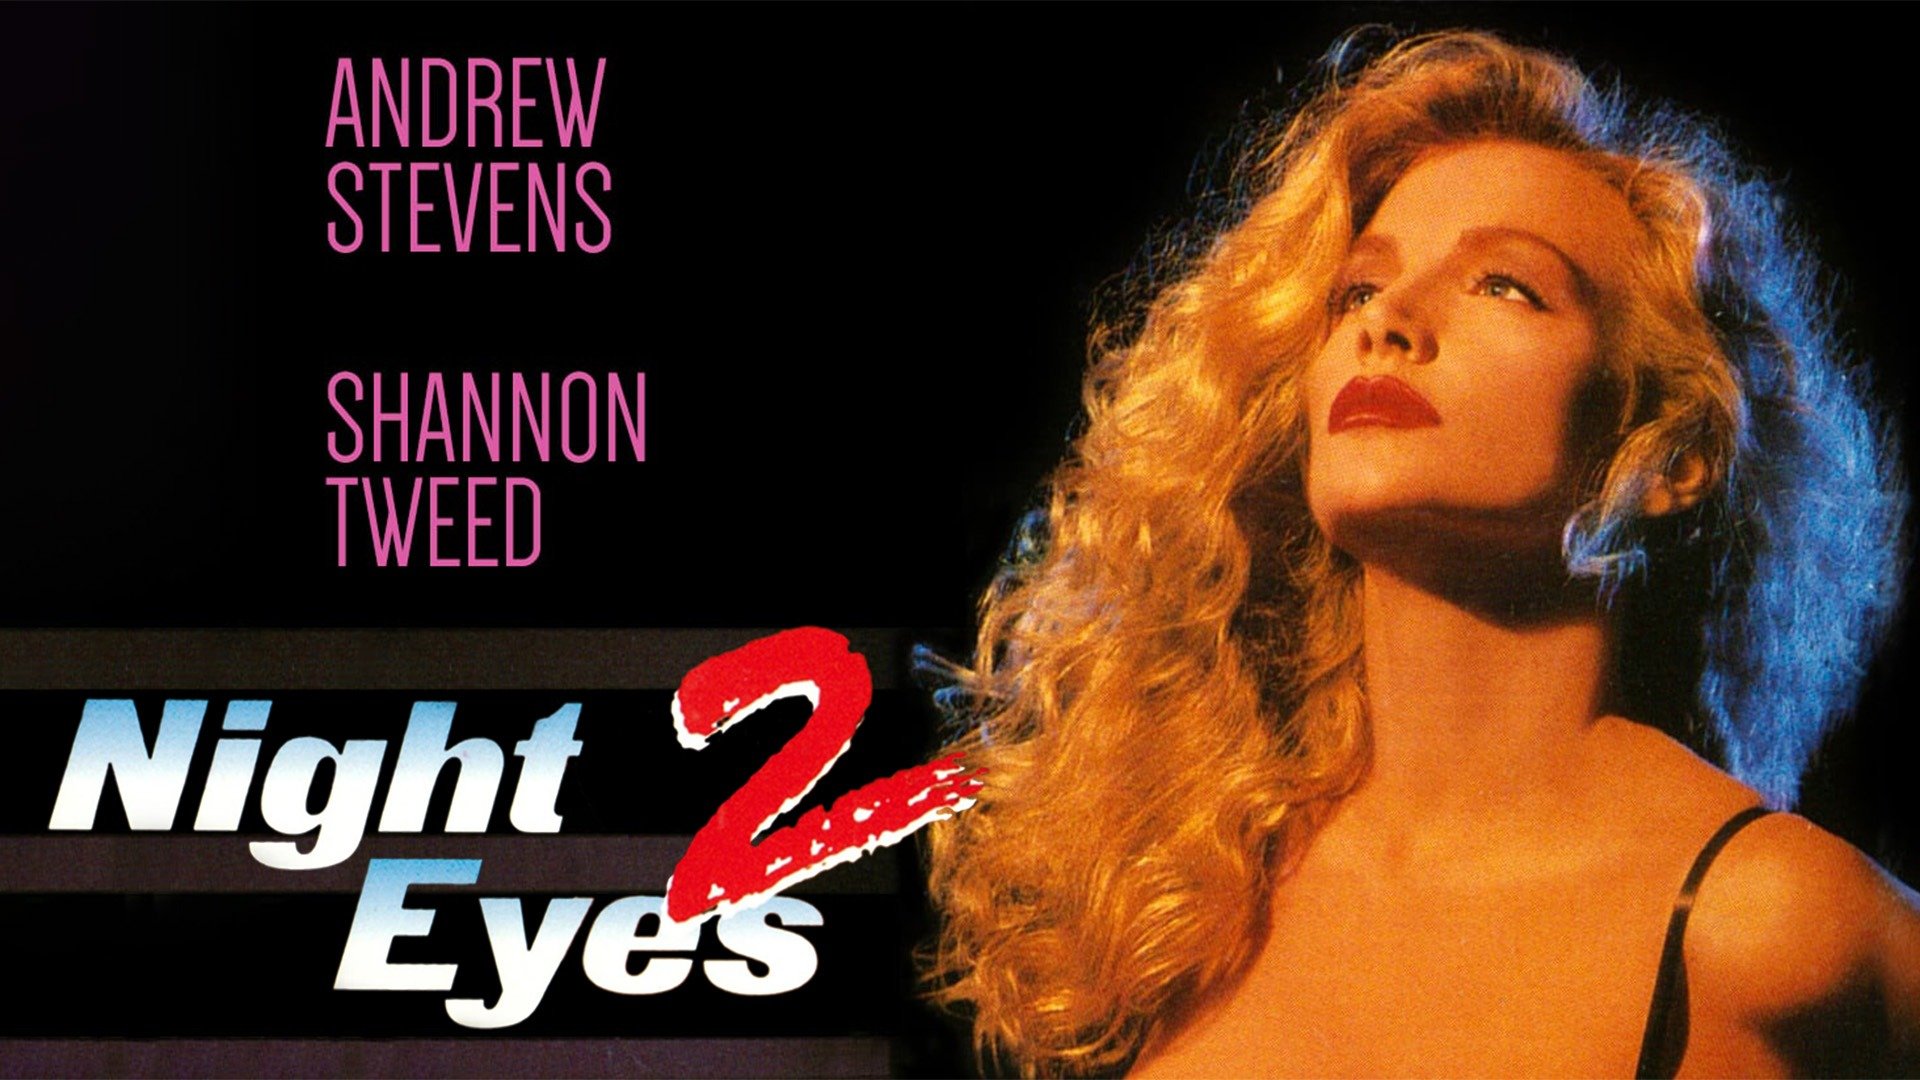 catherine huliganga recommends Night Eye Full Movie